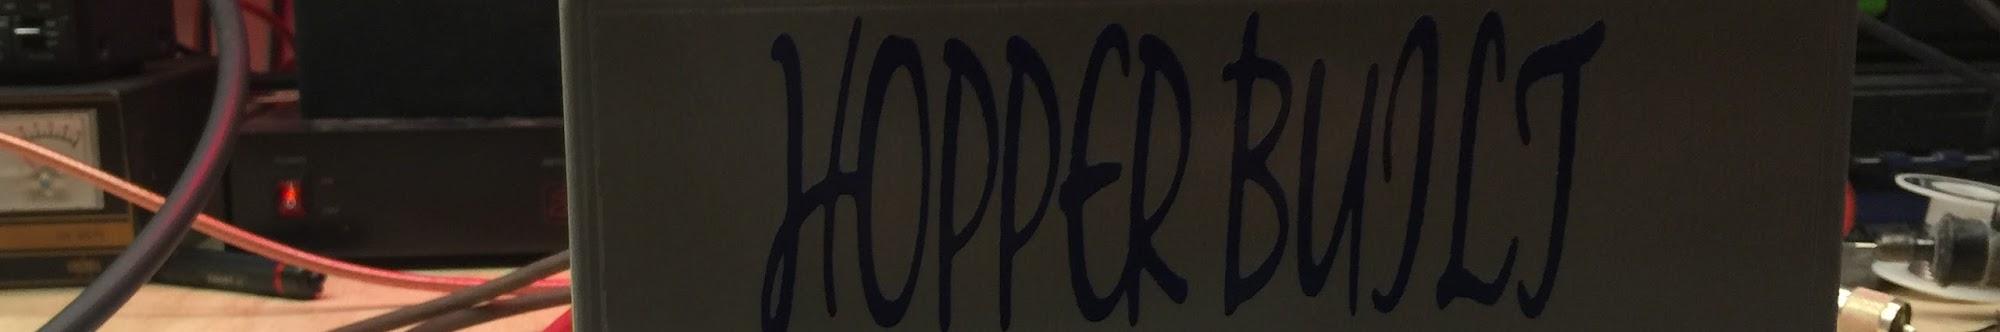 Hopper Built Amps